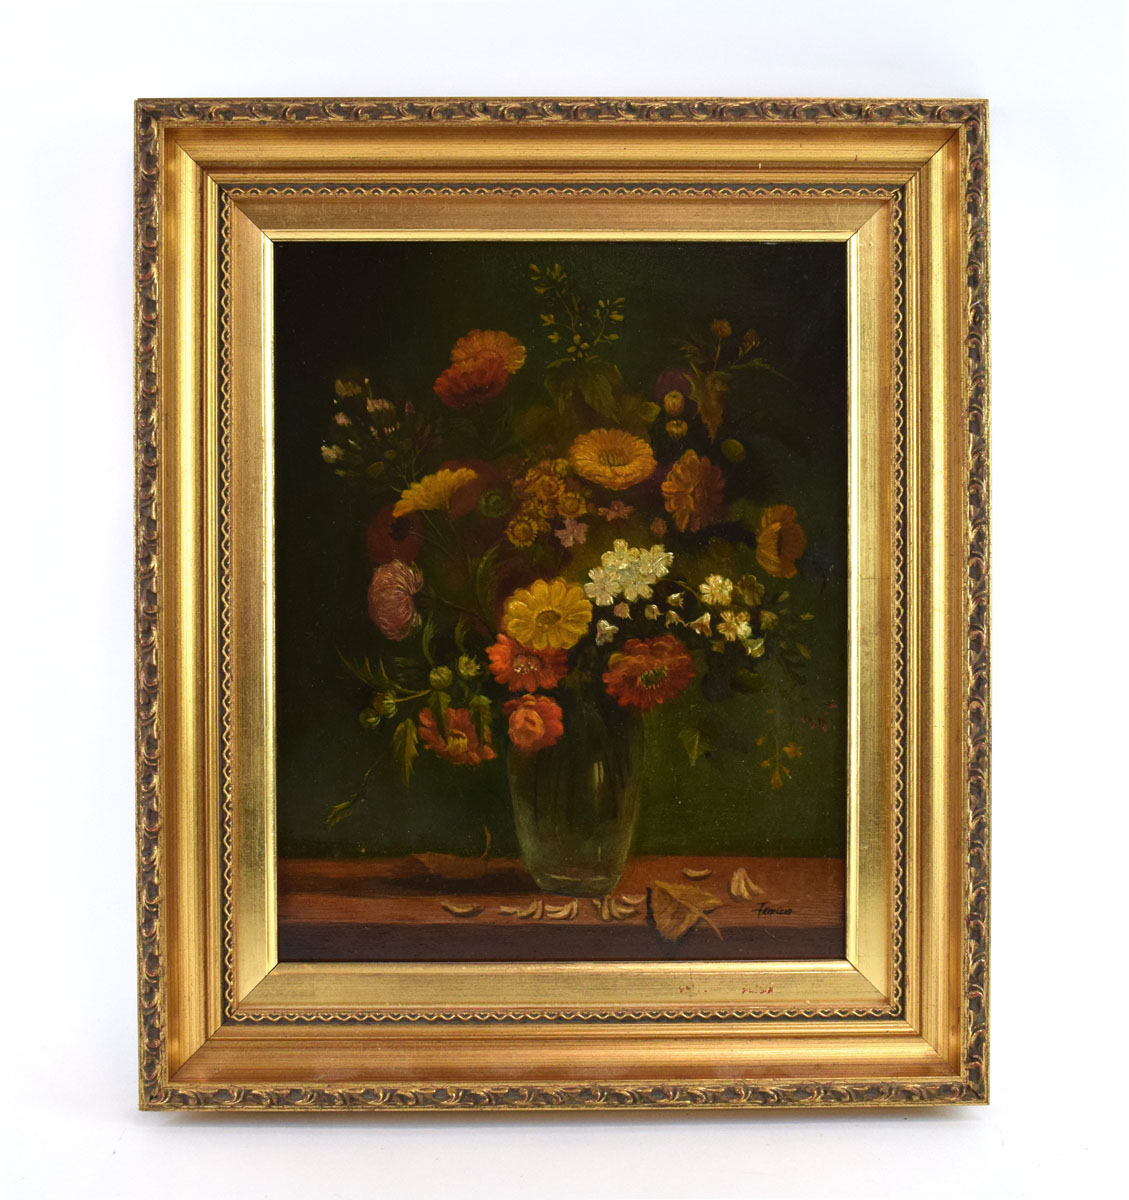 ..Francia (European, 20th century), still life-vase of flowers, signed, oil on board, 28.5 x 22.